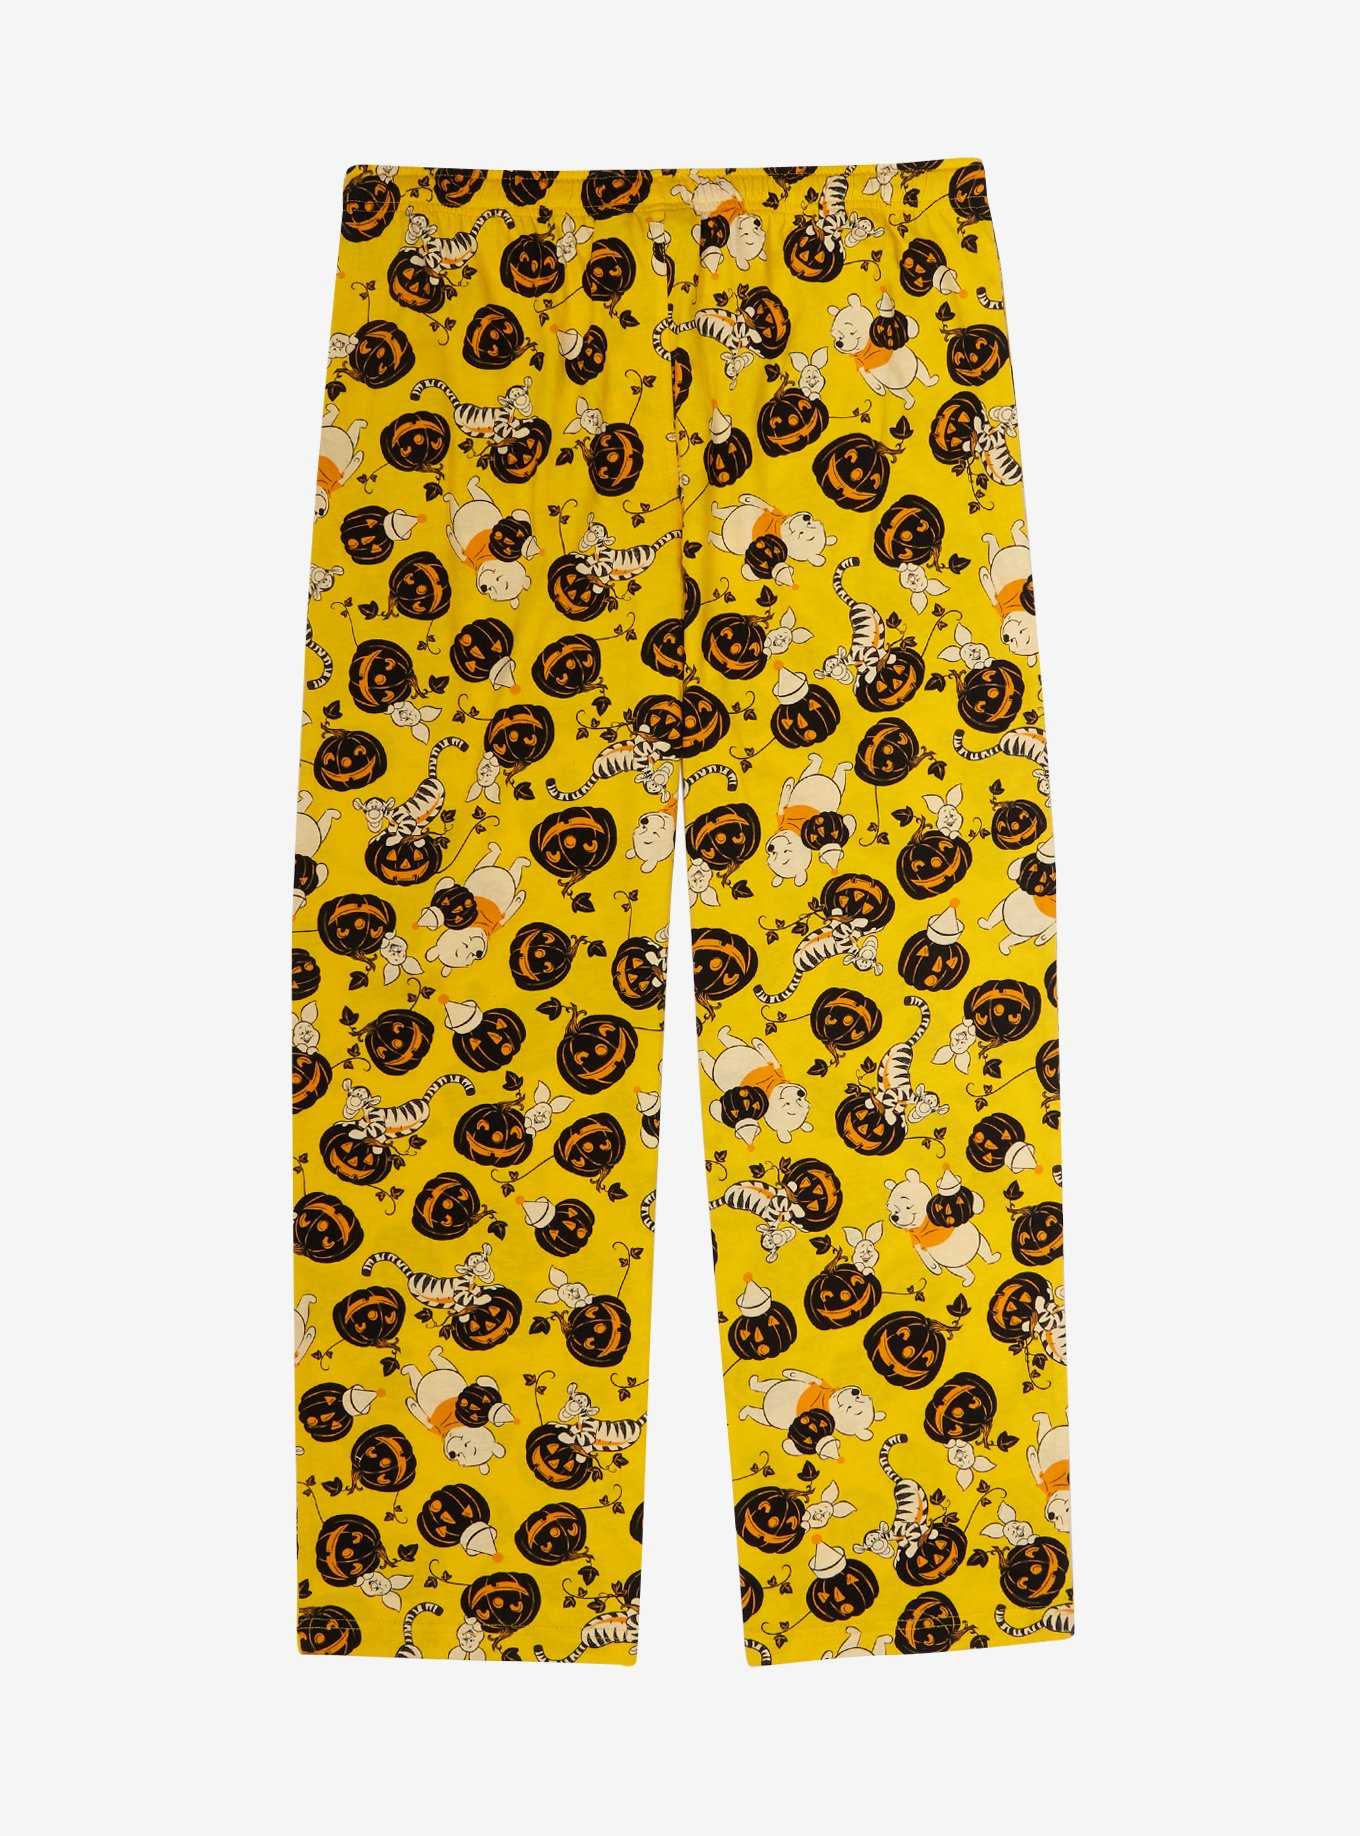 Disney Winnie the Pooh & Friends Jack-o-Lantern Allover Print Plus Size Sleep Pants -  BoxLunch Exclusive, , hi-res